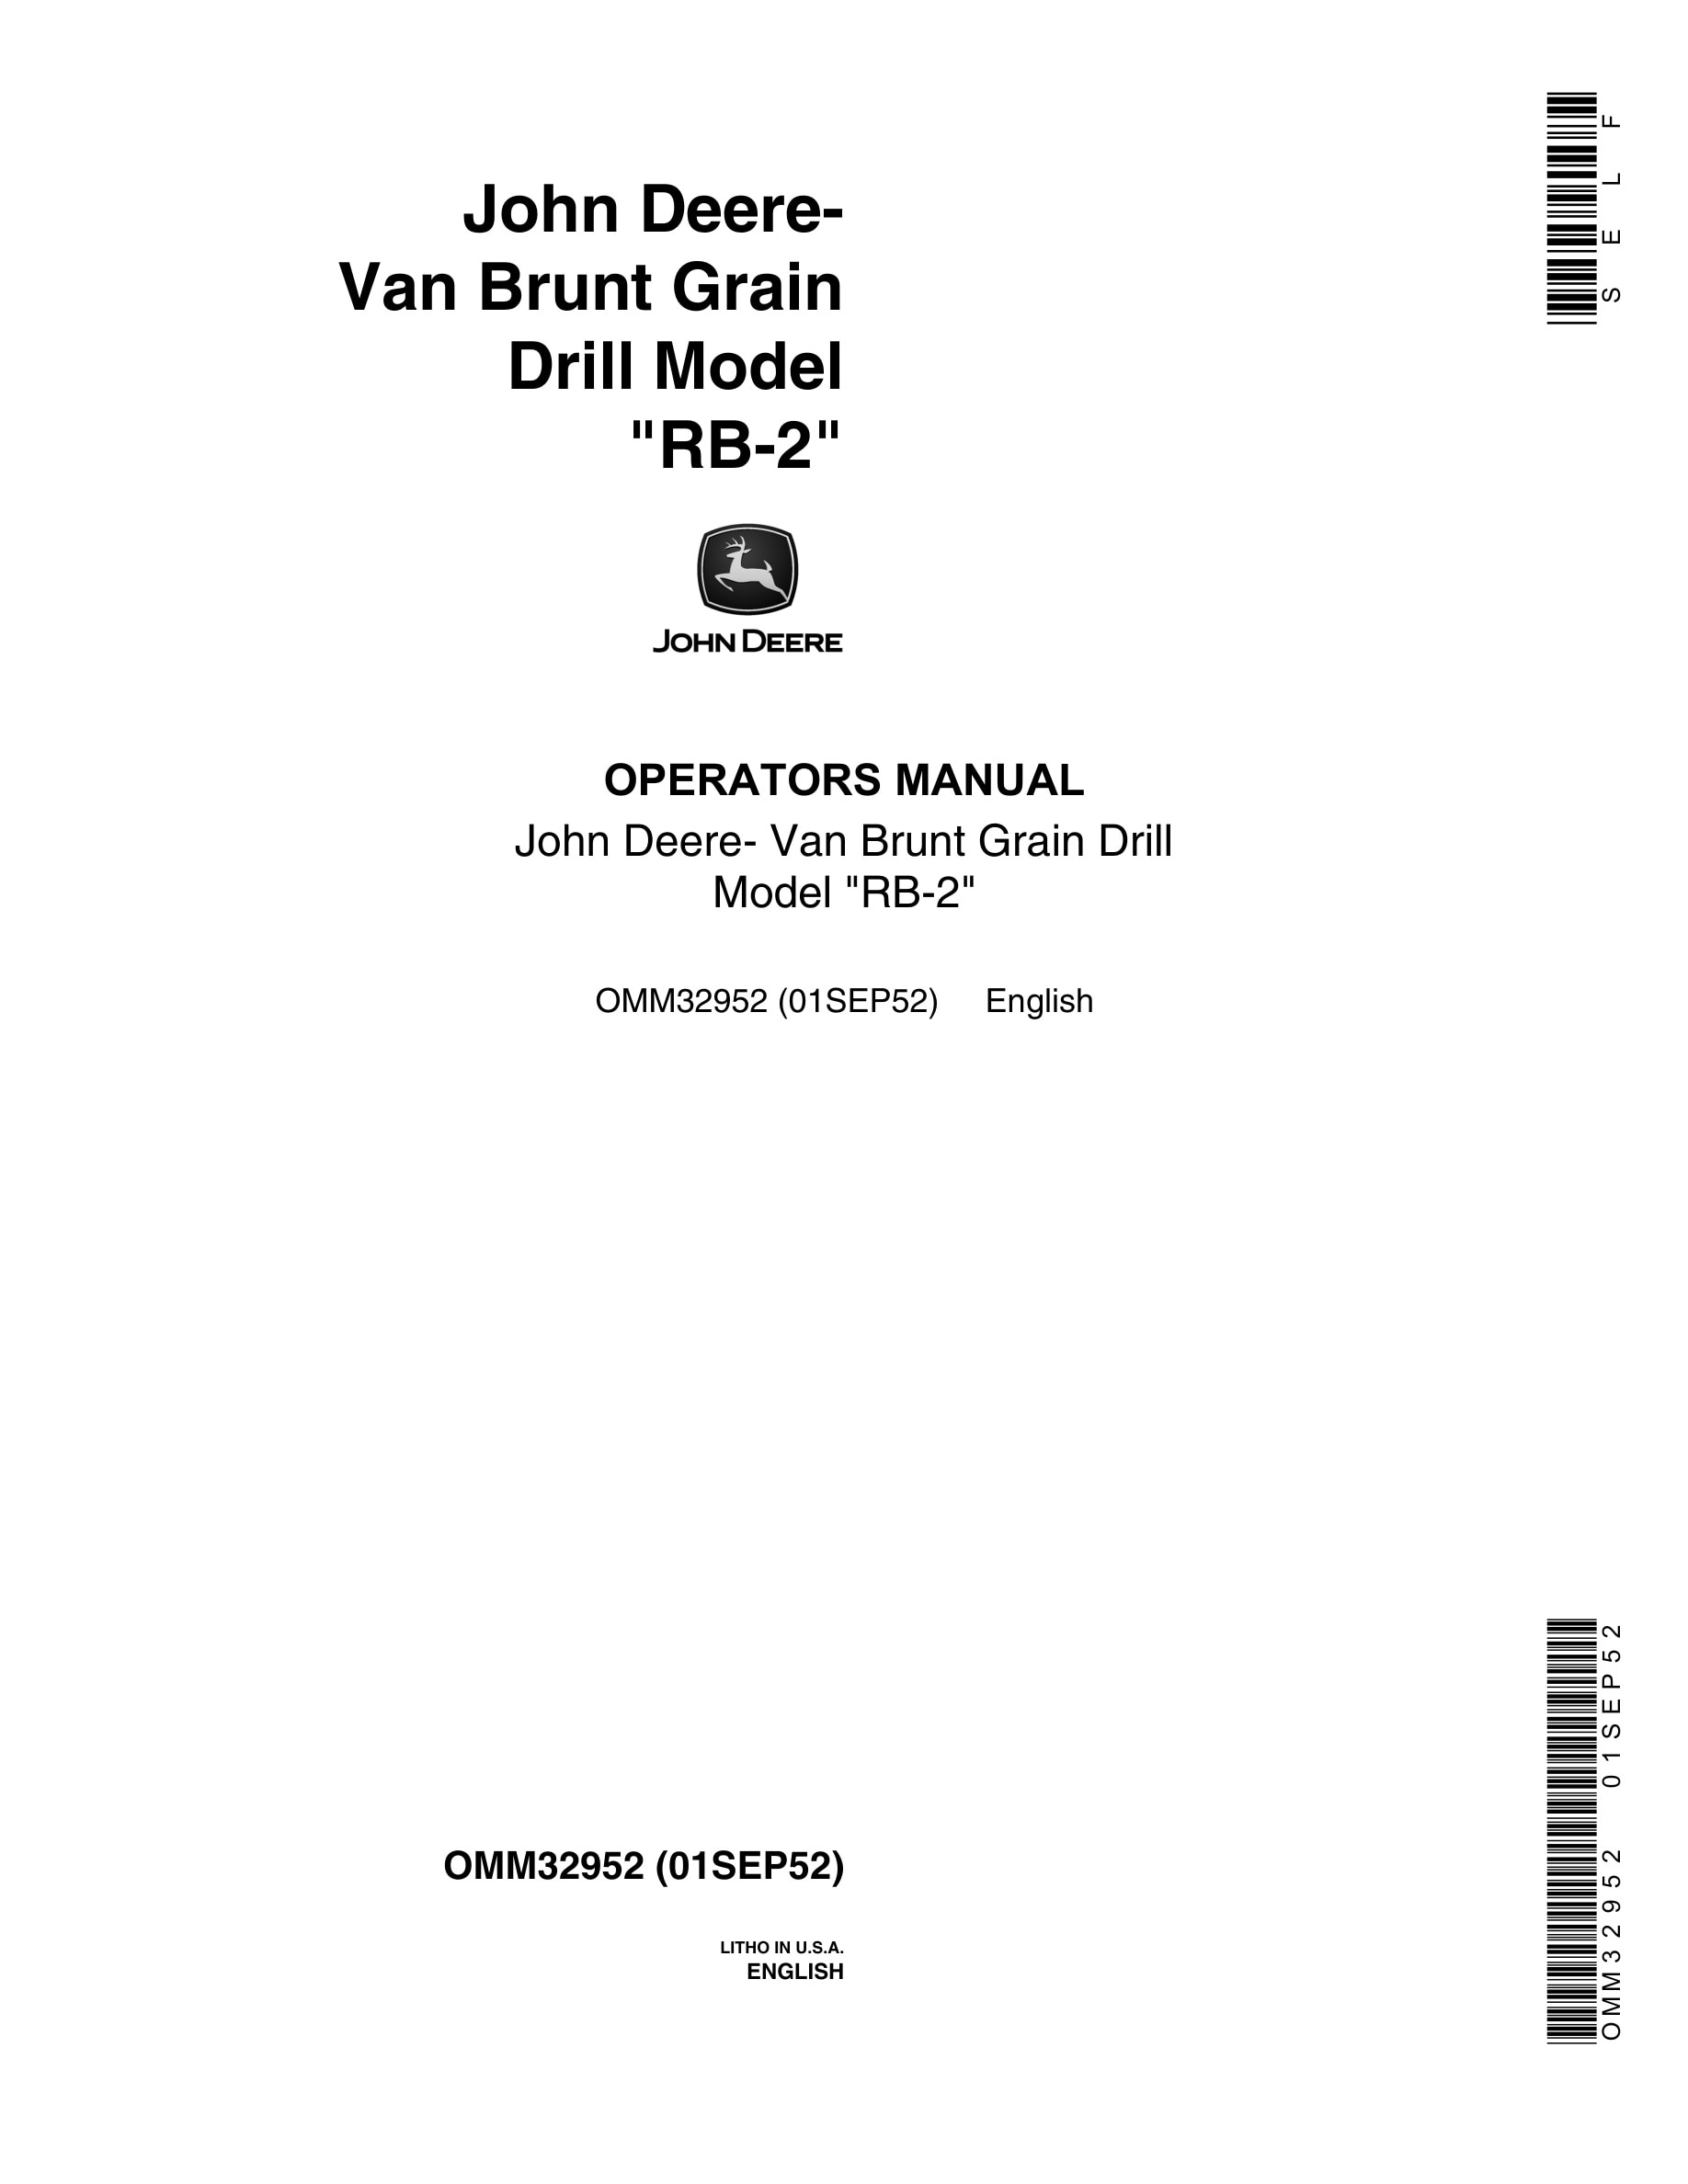 John Deere Model RB-2 Van Brunt Grain Drill Operator Manual OMM32952-1